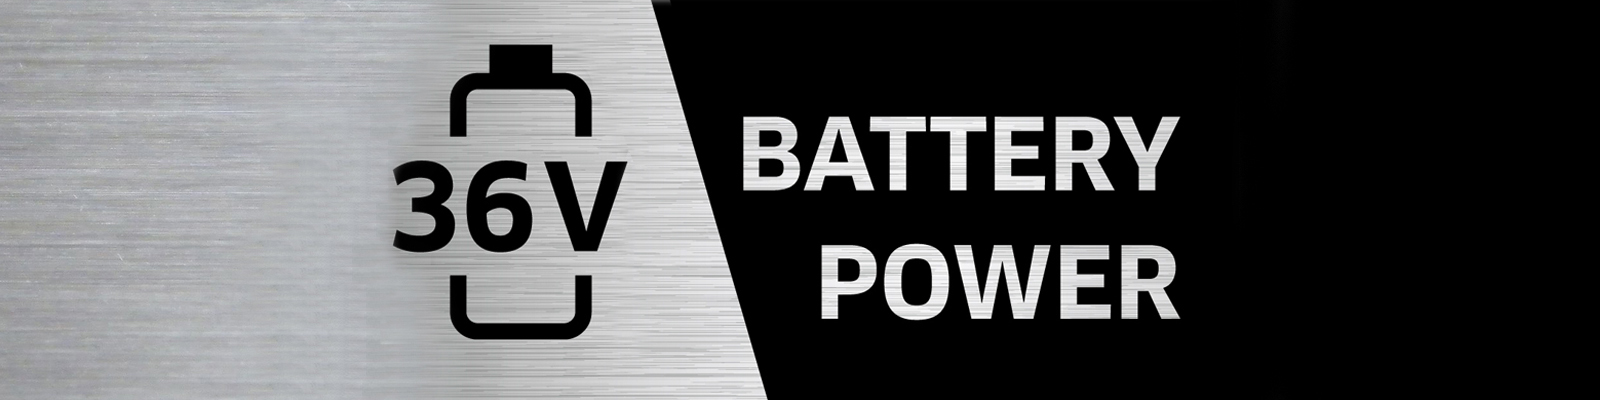 Karcher Battery Power 36 V